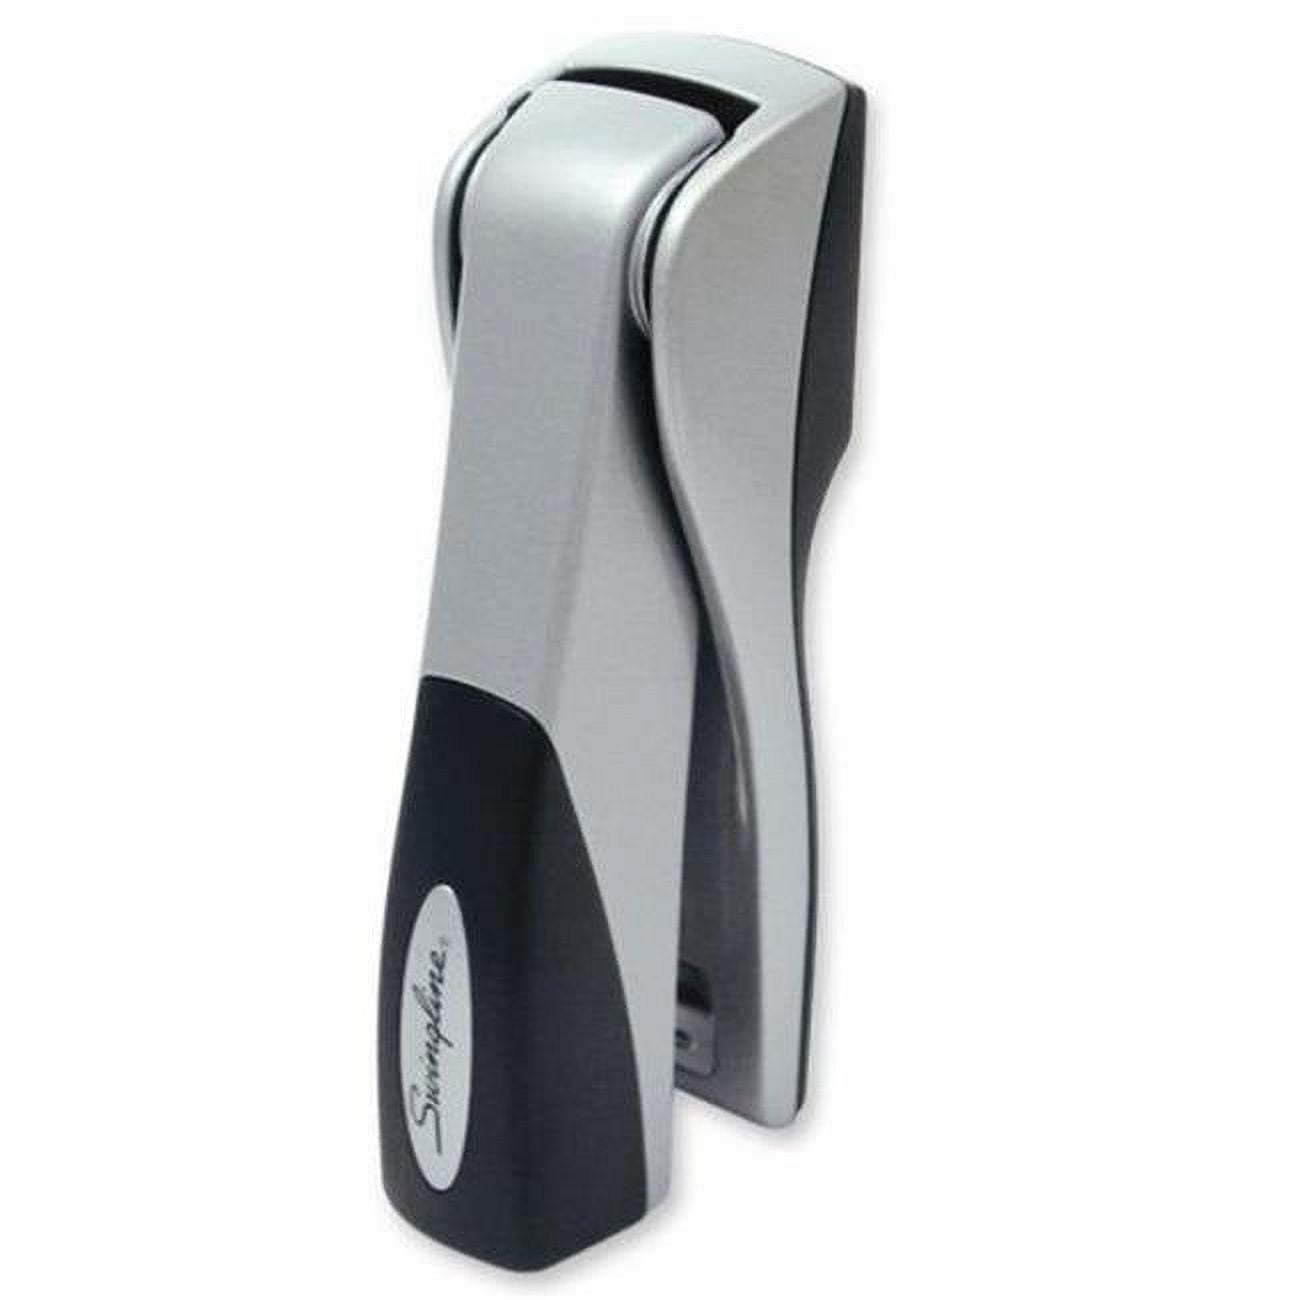 Acco Brands Swi87816 Optima Grip Silver - Compact Stapler